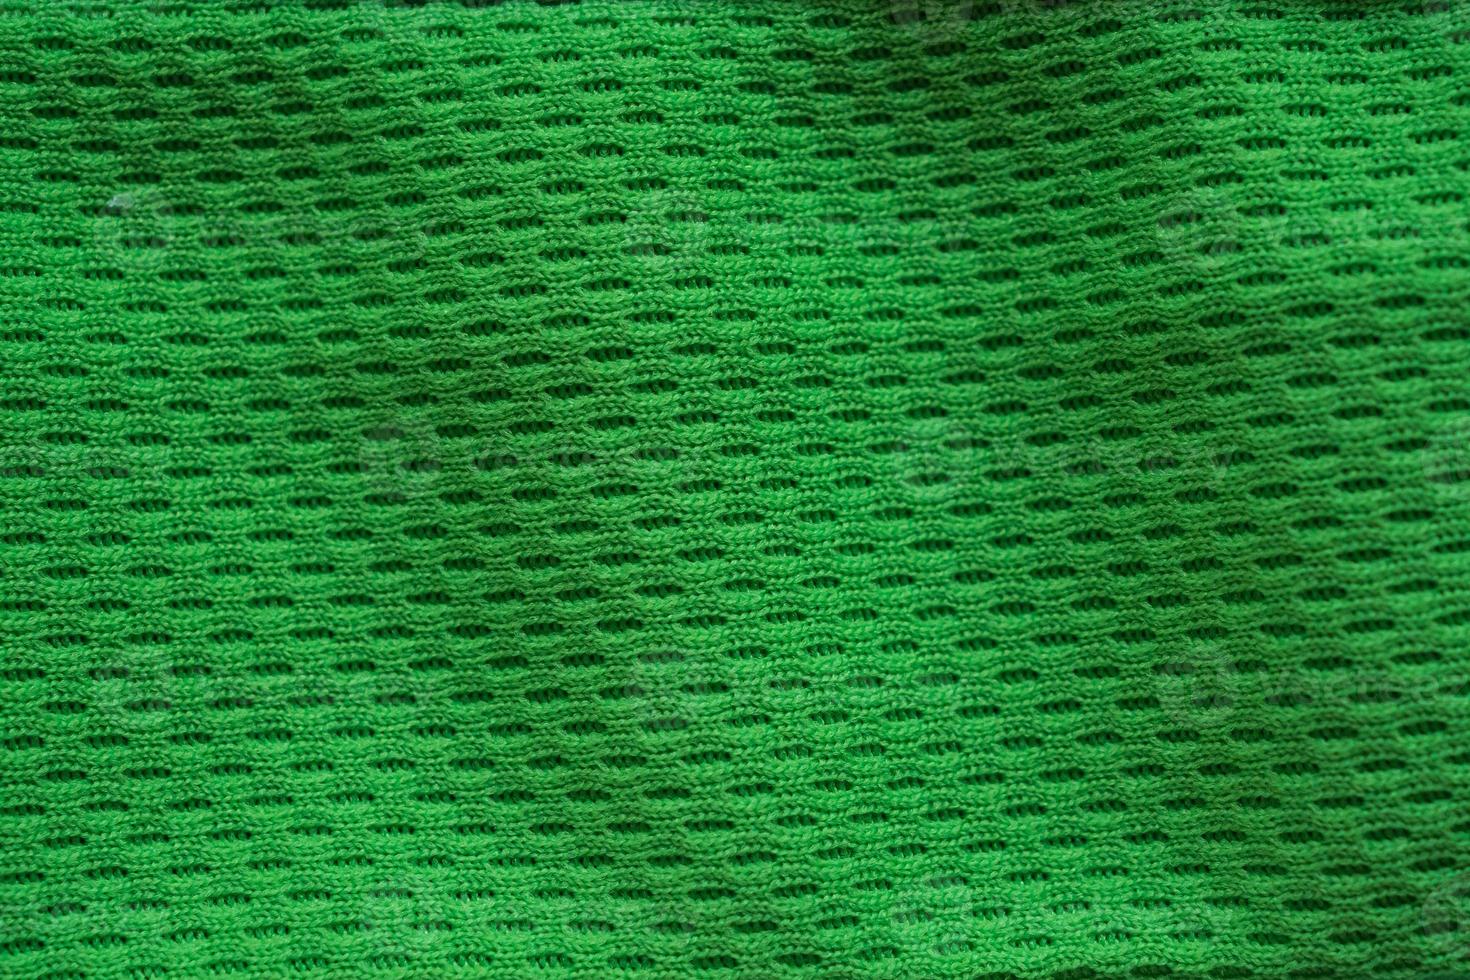 maillot de football de vêtements de sport en tissu vert avec fond de texture en maille d'air photo